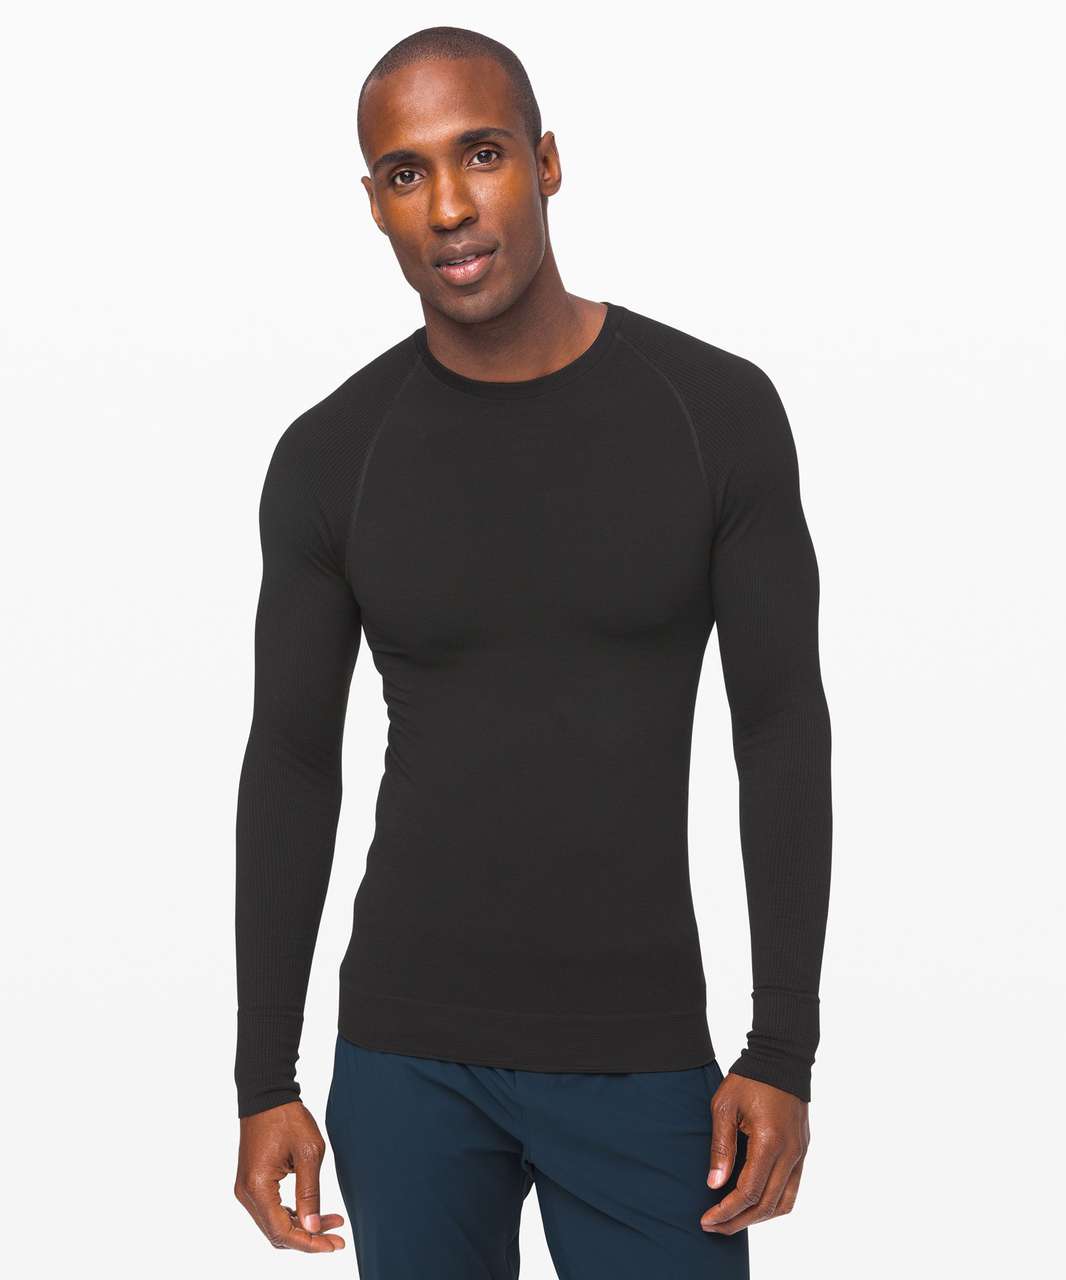 https://storage.googleapis.com/lulu-fanatics/product/72089/1280/lululemon-keep-the-heat-thermal-long-sleeve-shirt-black-0001-386421.jpg